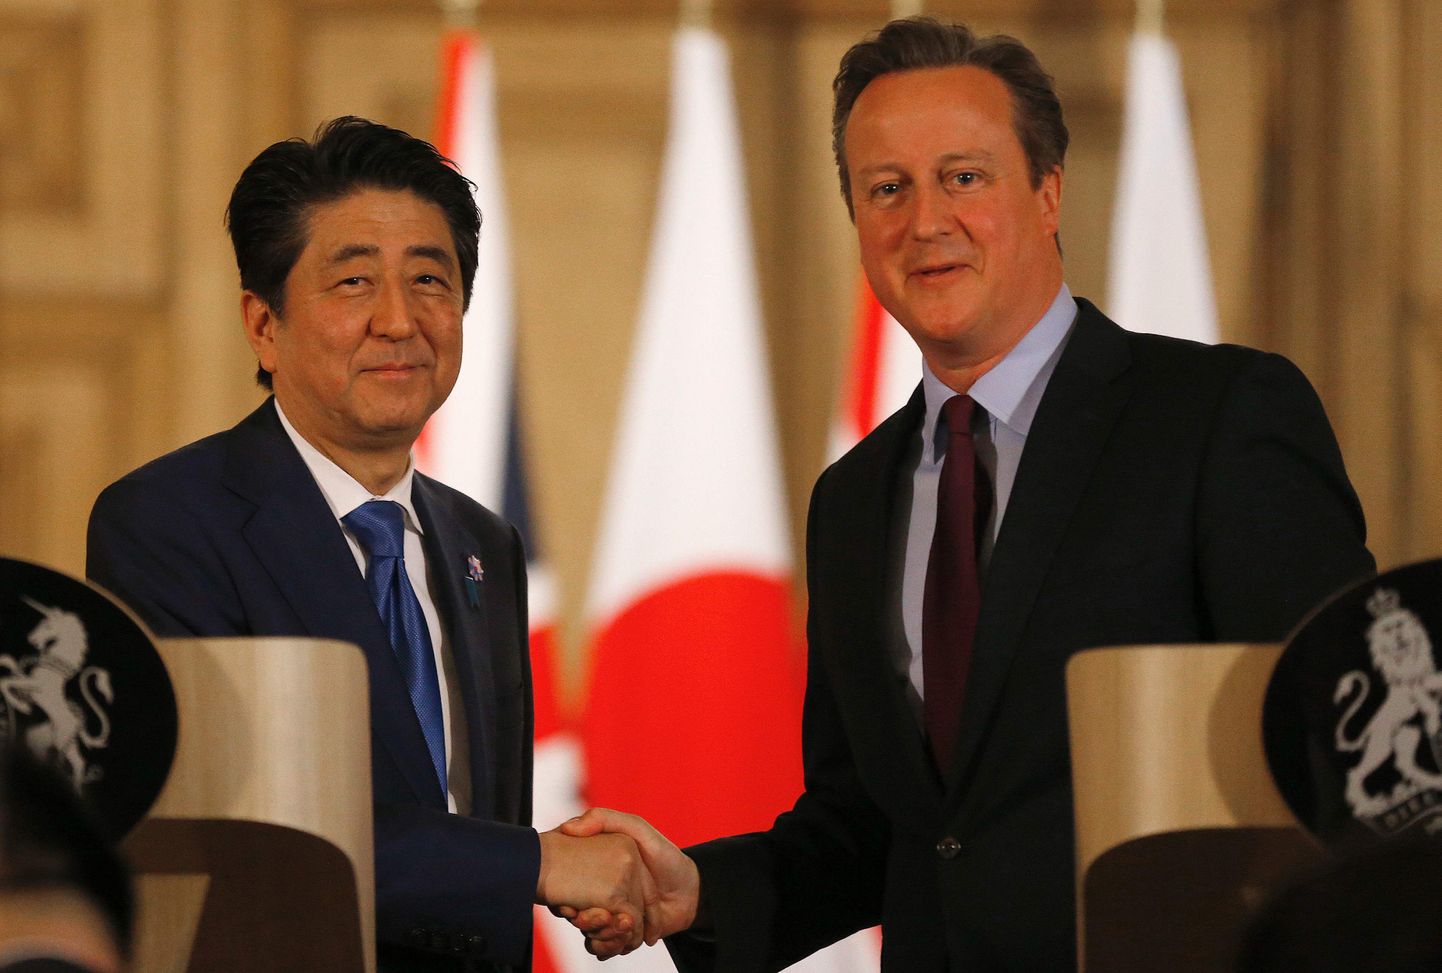 Briti peaminister David Cameron ja Jaapani peaminister Shinzo Abe.